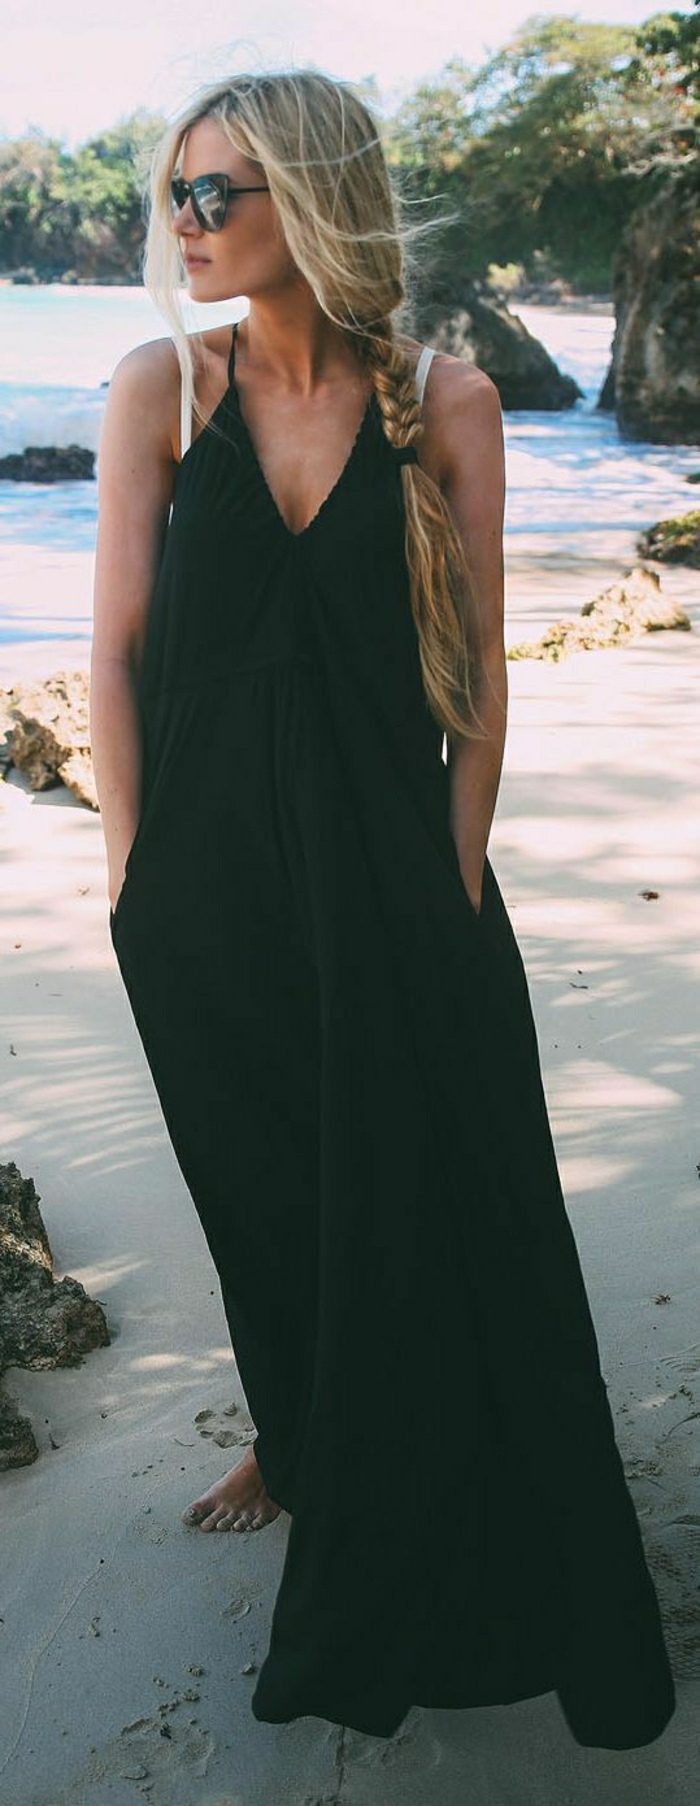 Sand-Strand-Sommer-schwarzes-langes-Kleid-Sonnenbrille